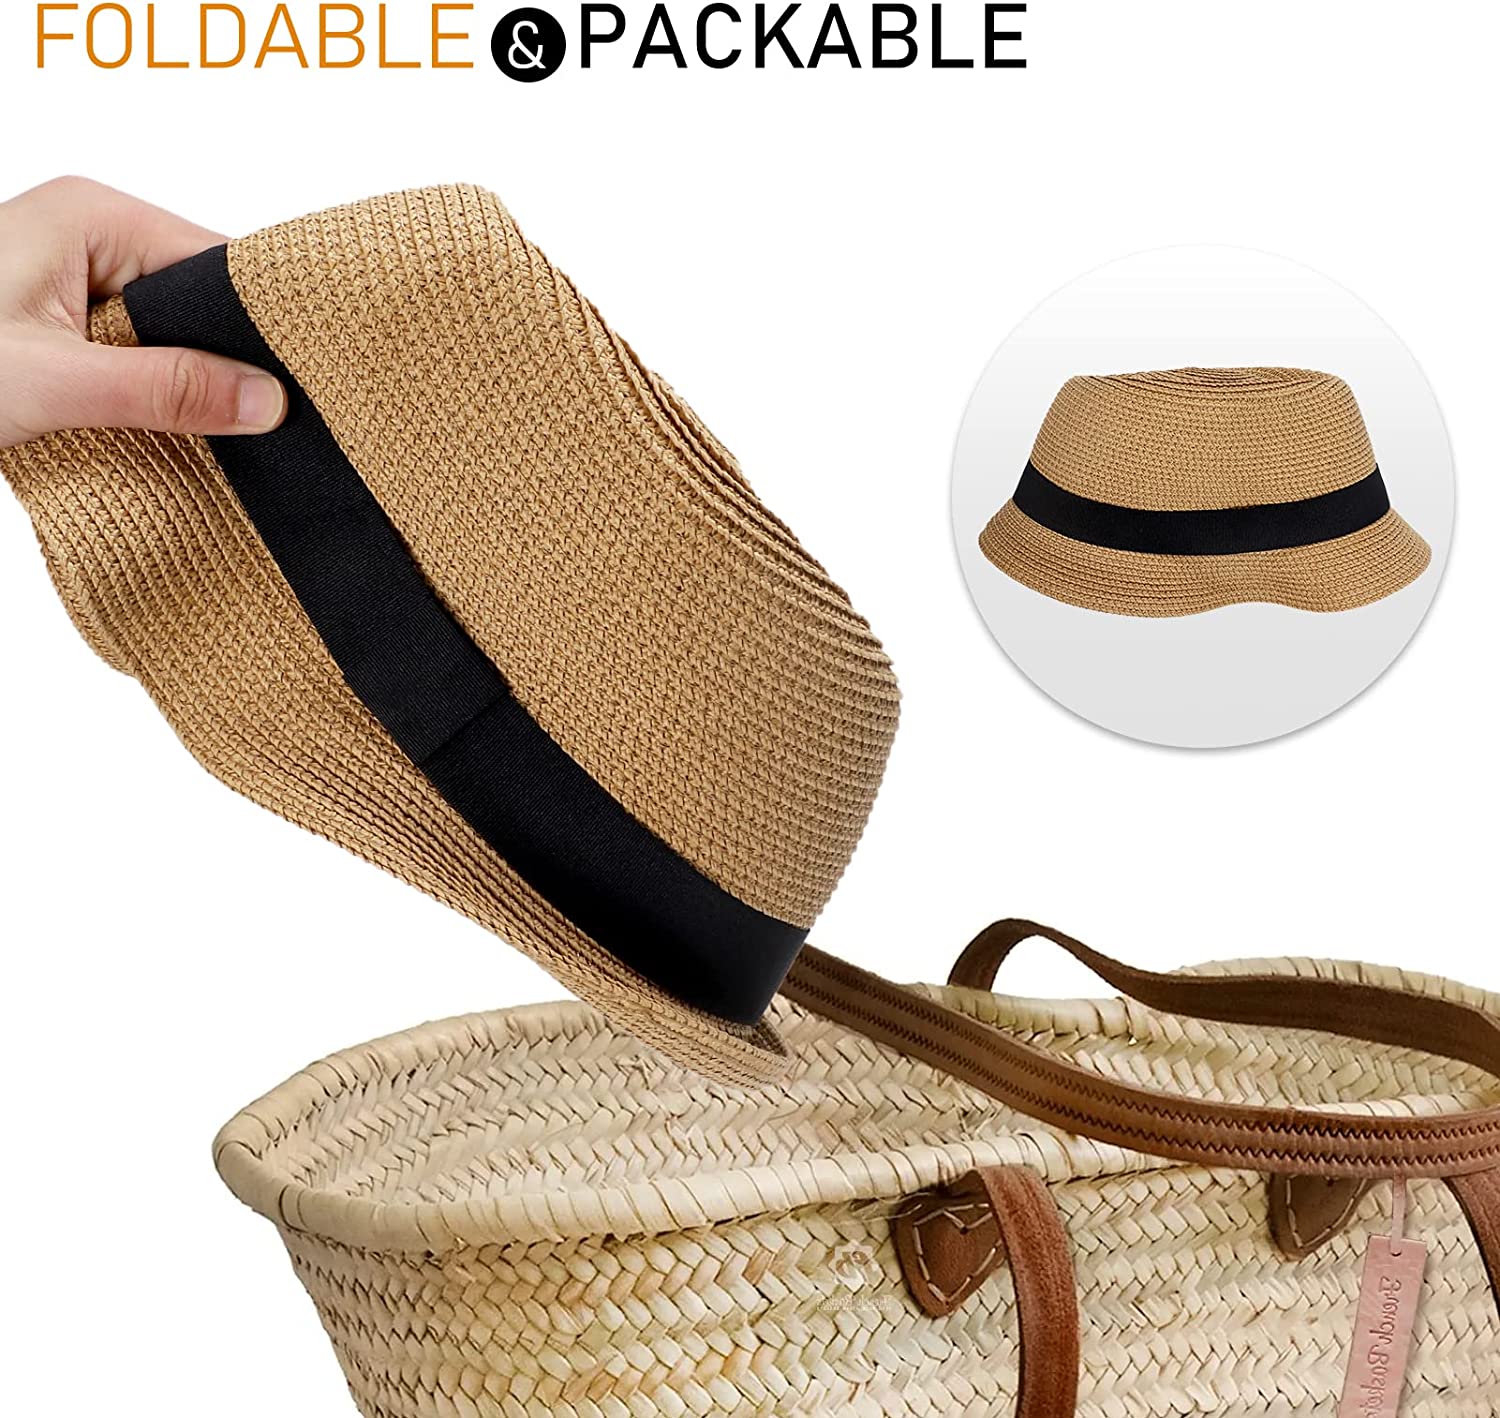 Womens Short Brim Straw Sun Hat Fedora Trilby Hat Panama Men Roll Up ...